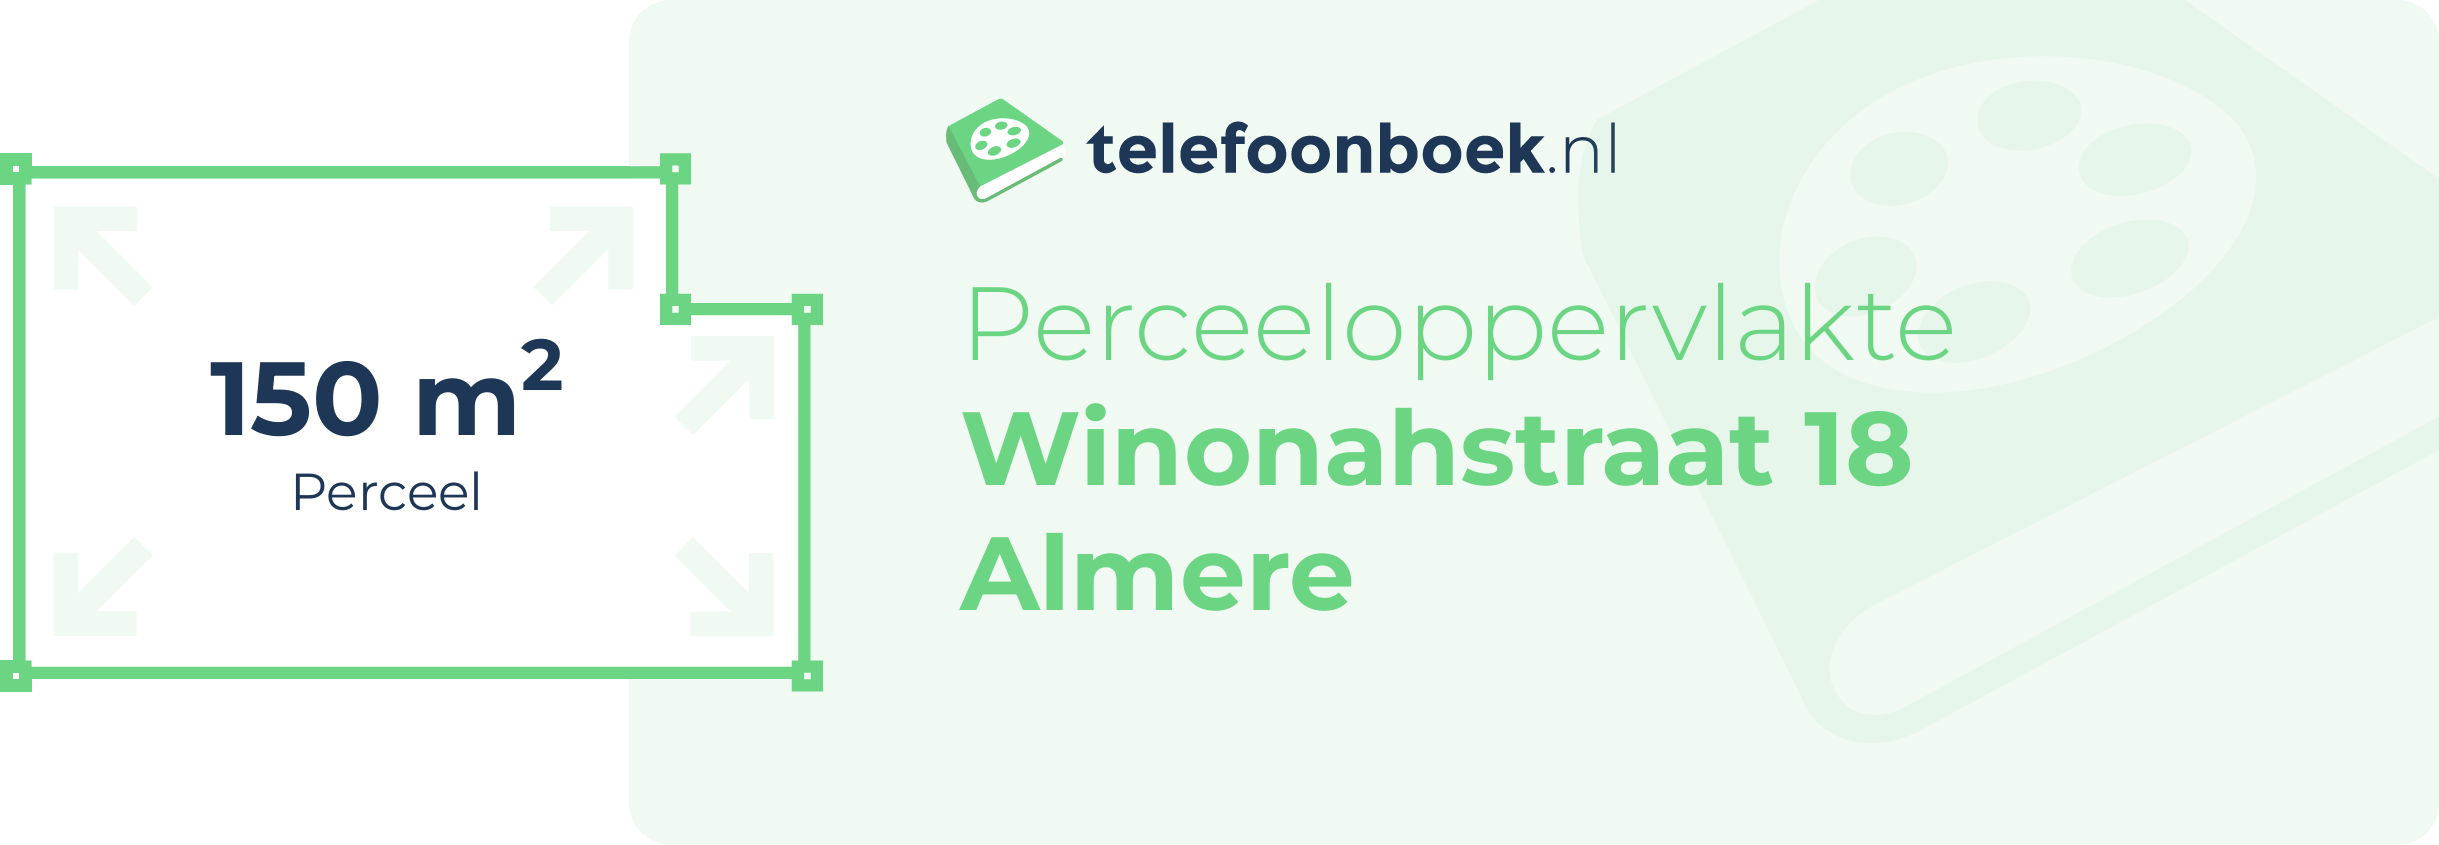 Perceeloppervlakte Winonahstraat 18 Almere